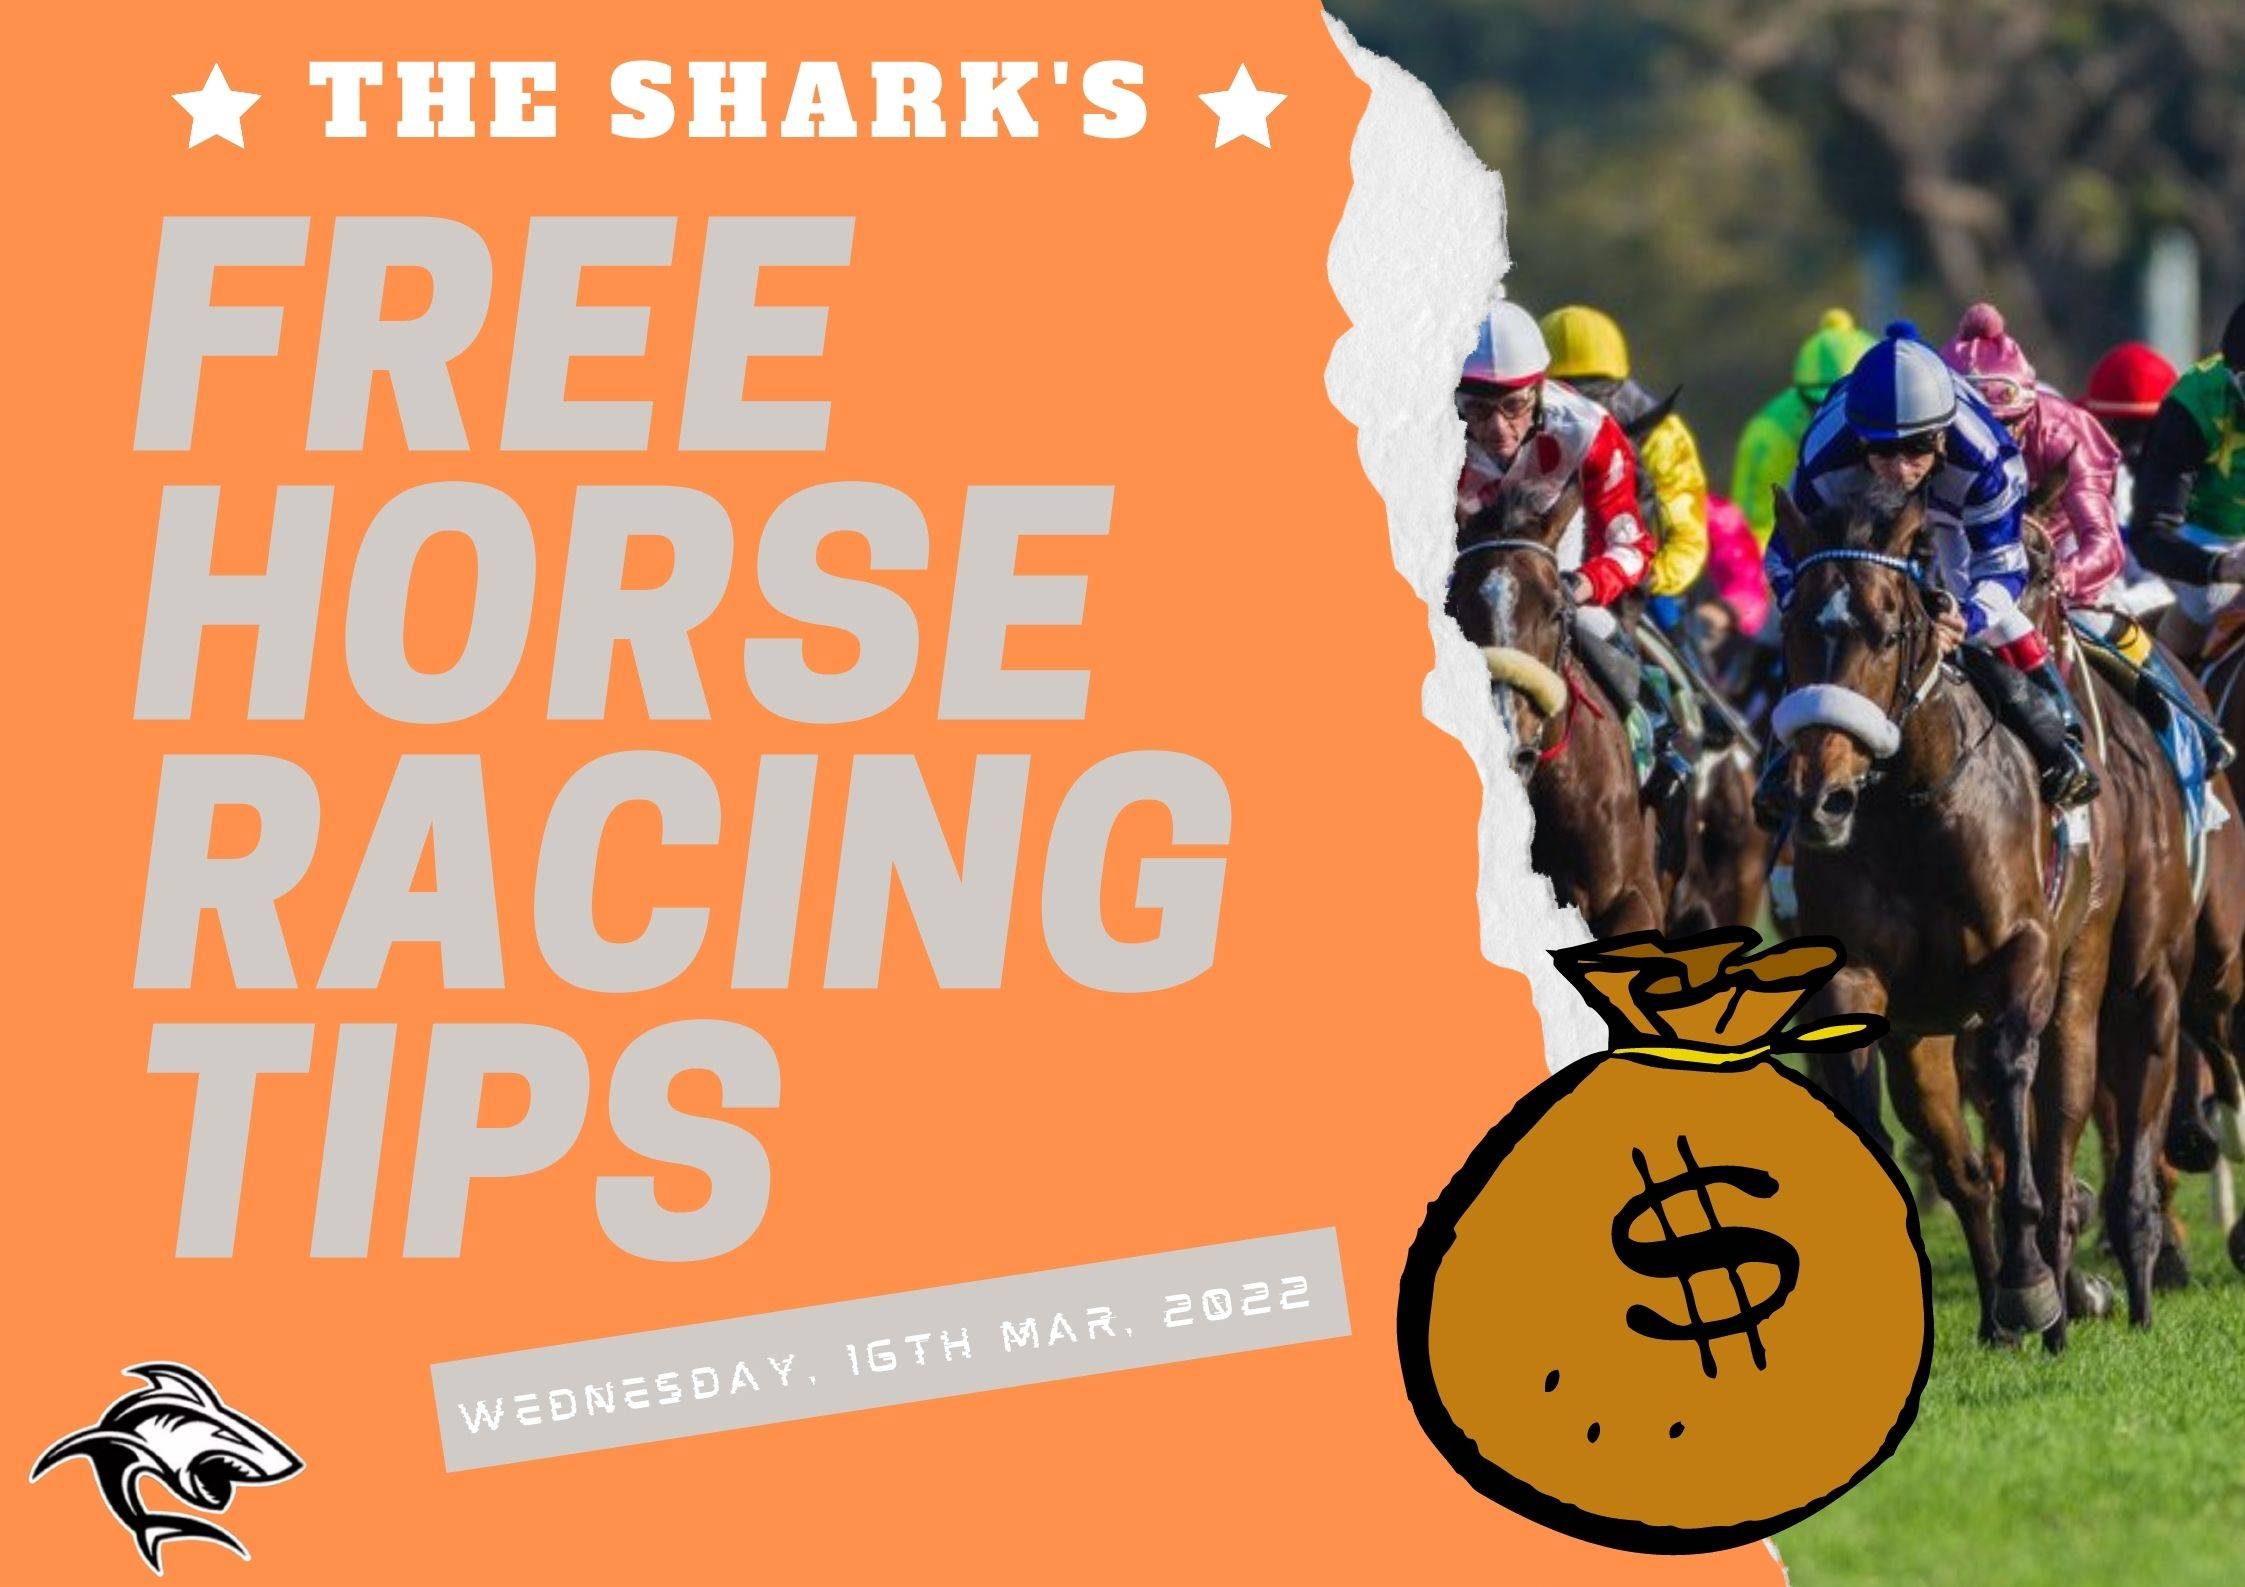 Free Horse Racing Tips - 16th Mar